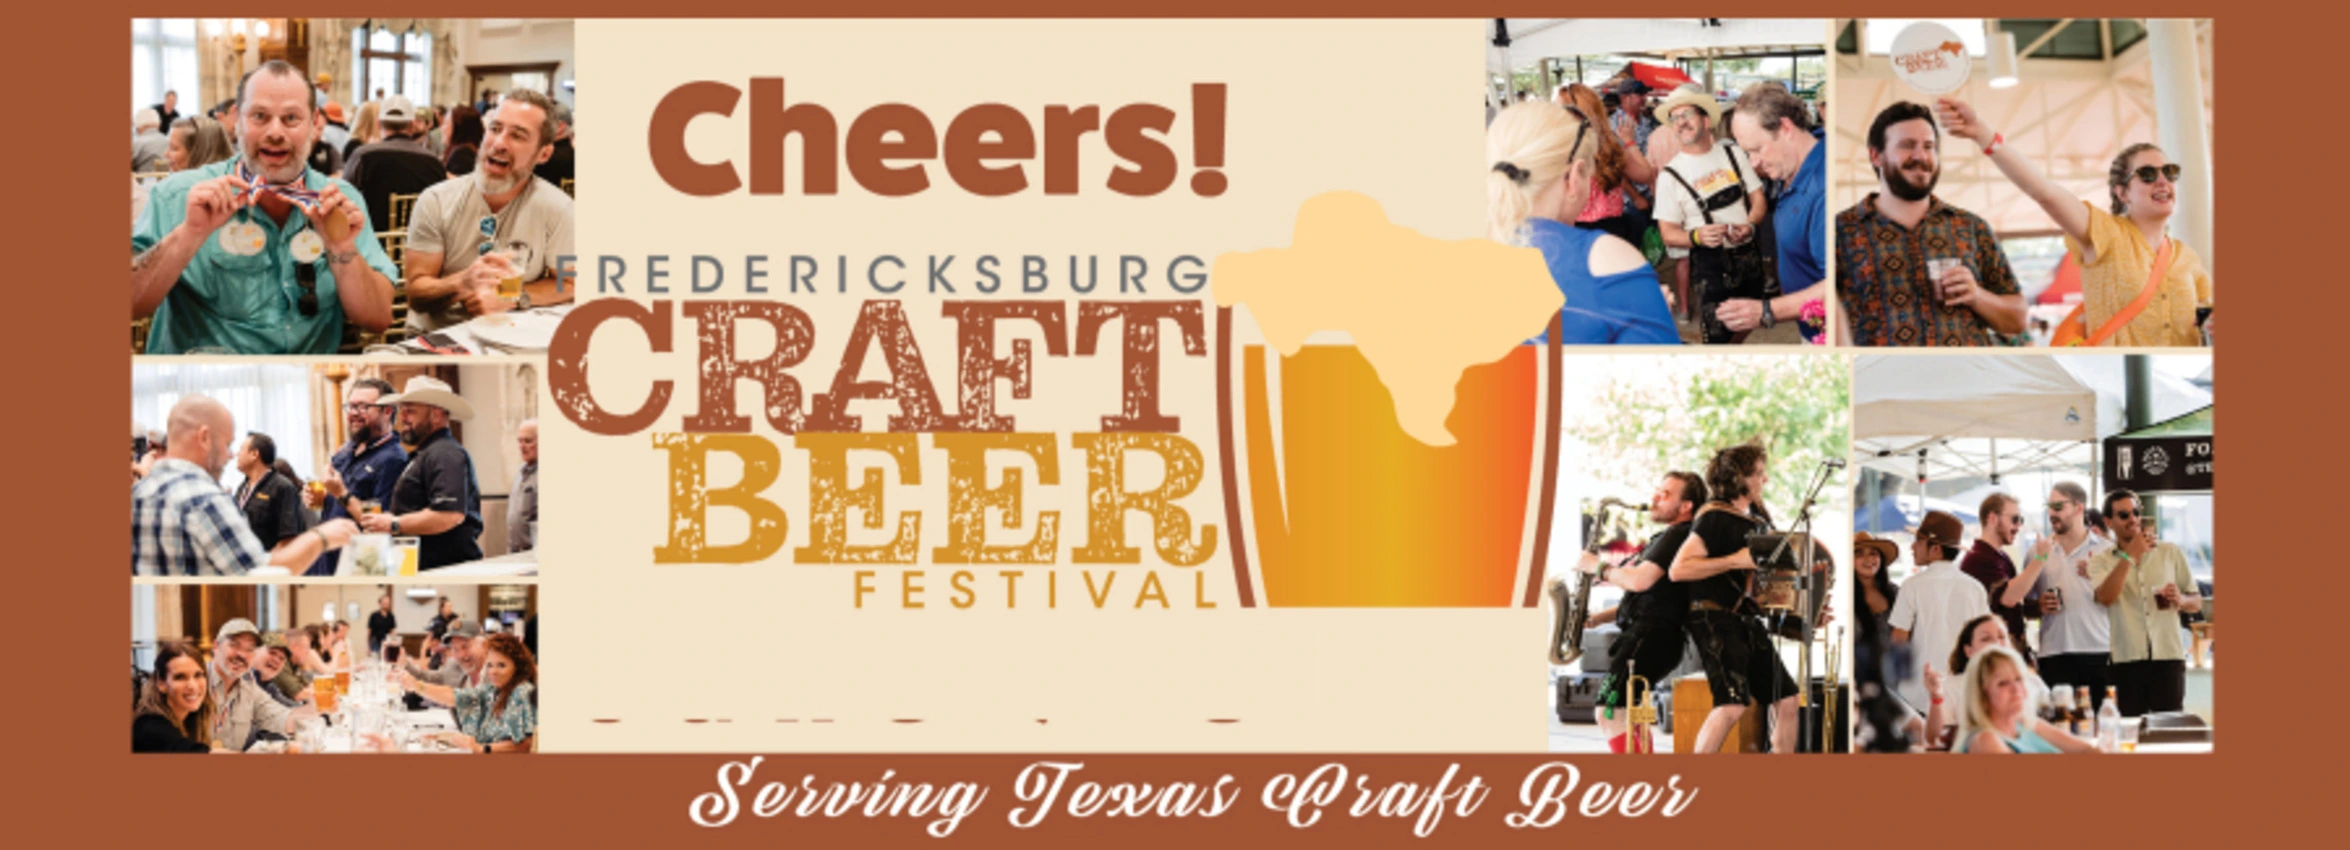 Fredericksburg-Craft-Beer-Festival_Desktop_ET